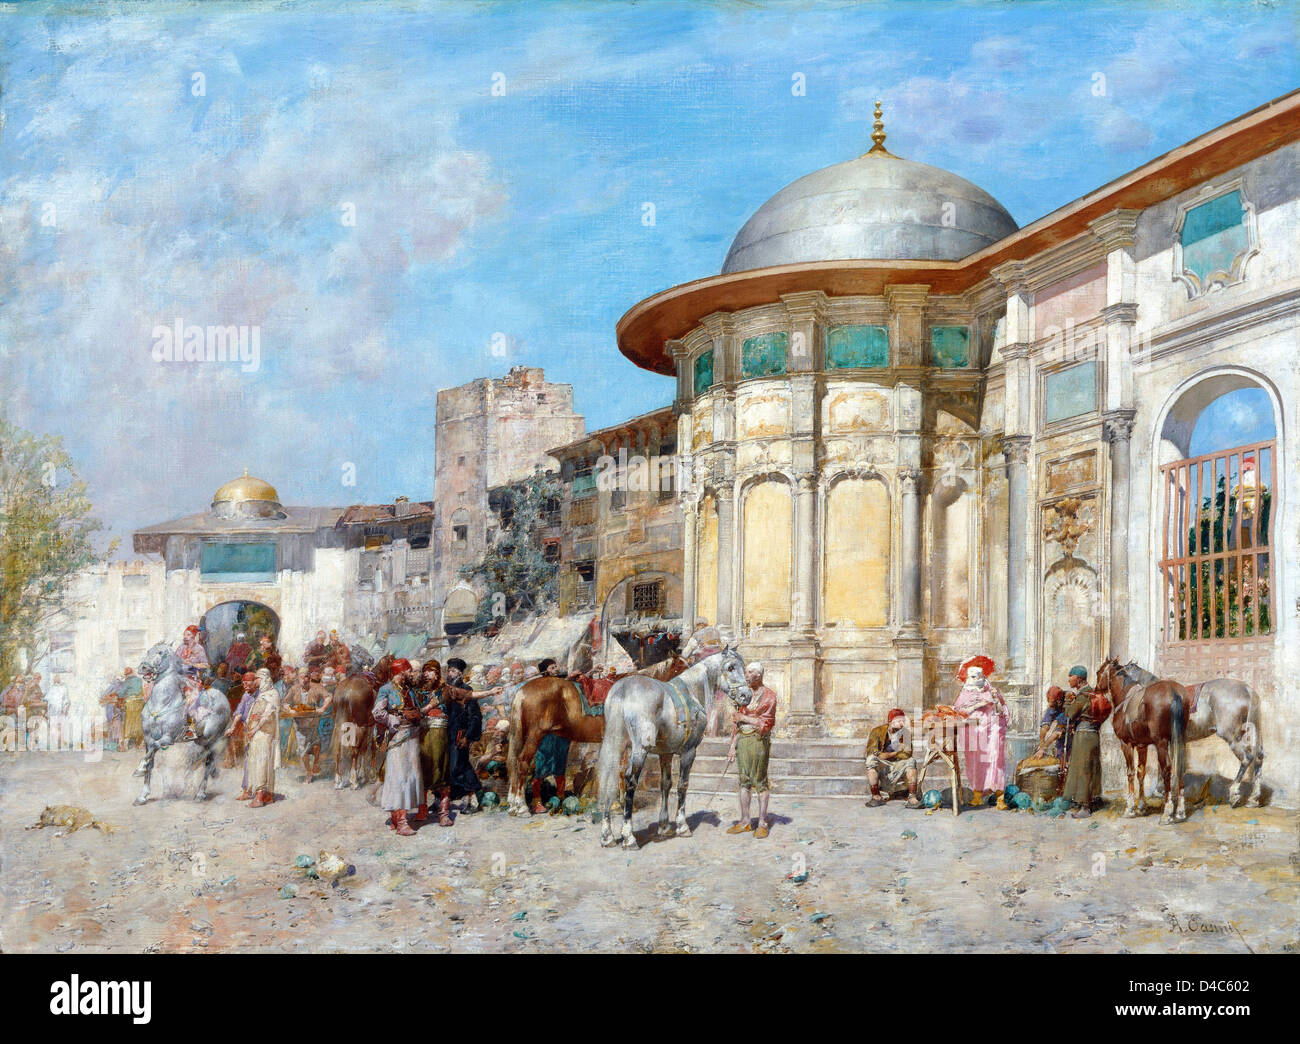 Alberto Pasini, Horse market, Syria 1826-1899 Oil on canvas. Art Gallery of New South Wales, The Domain, Sydney Stock Photo